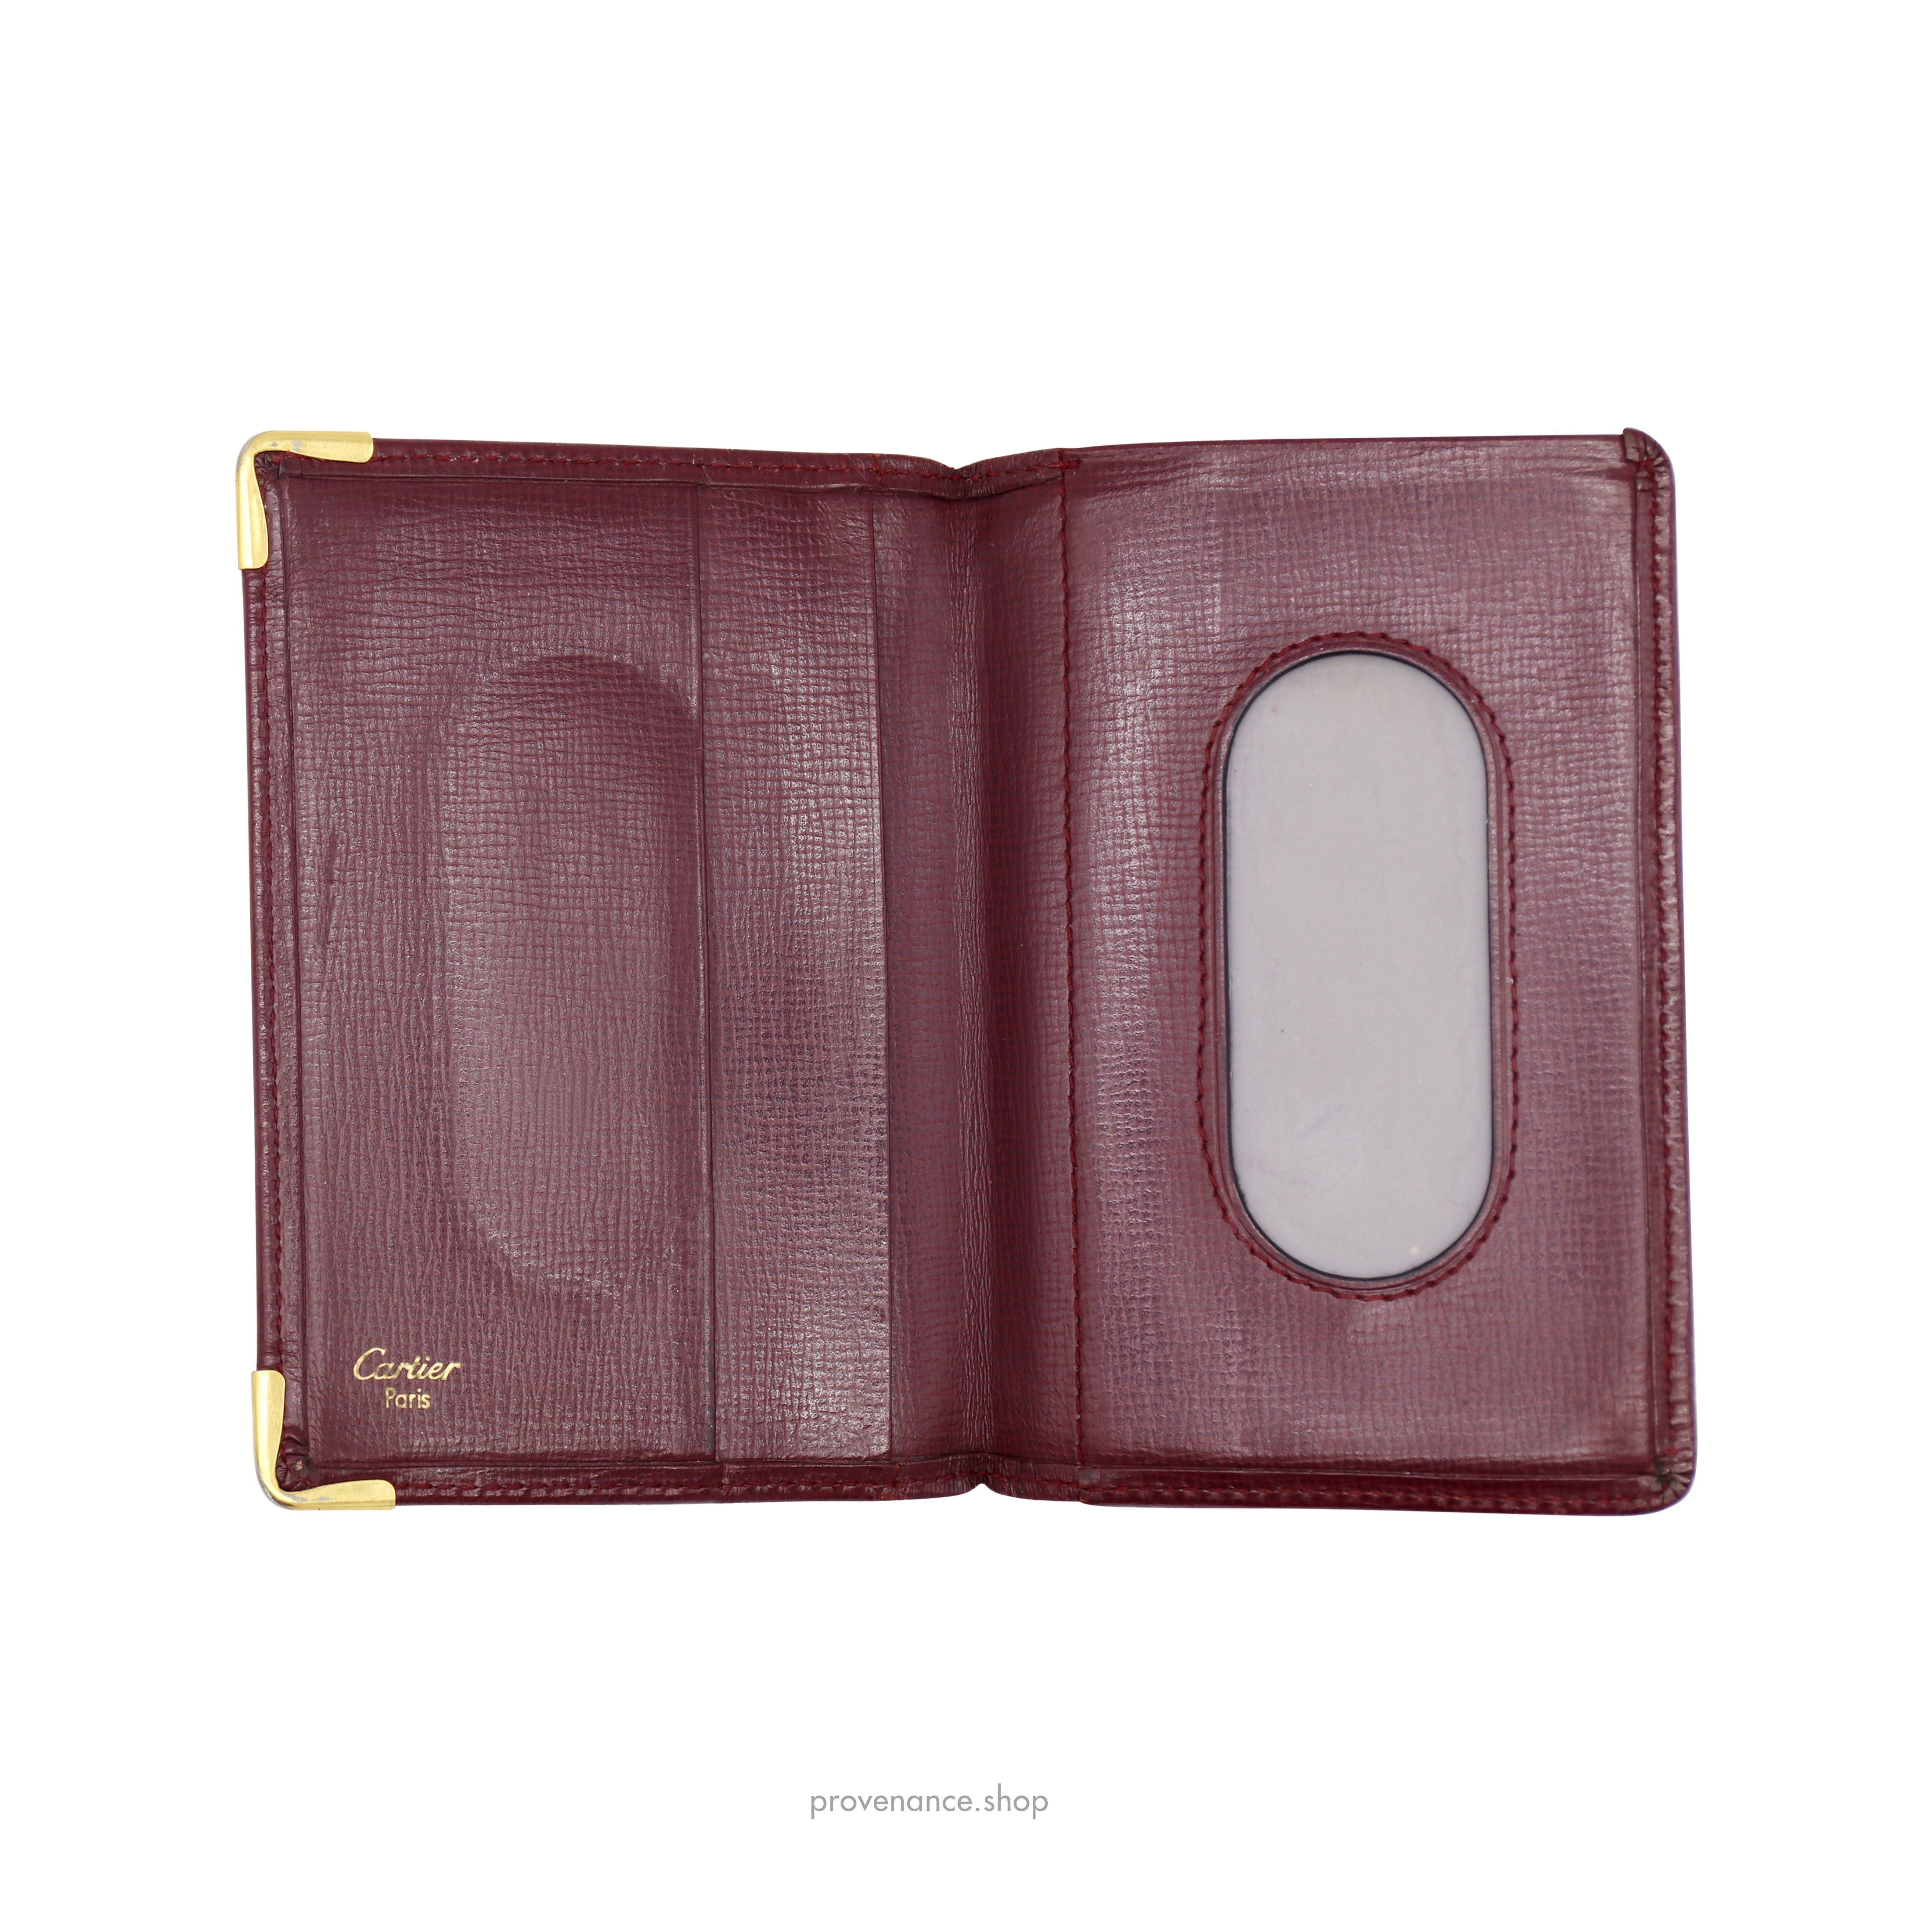 Pocket Organizer Wallet - Burgundy Leather - 5